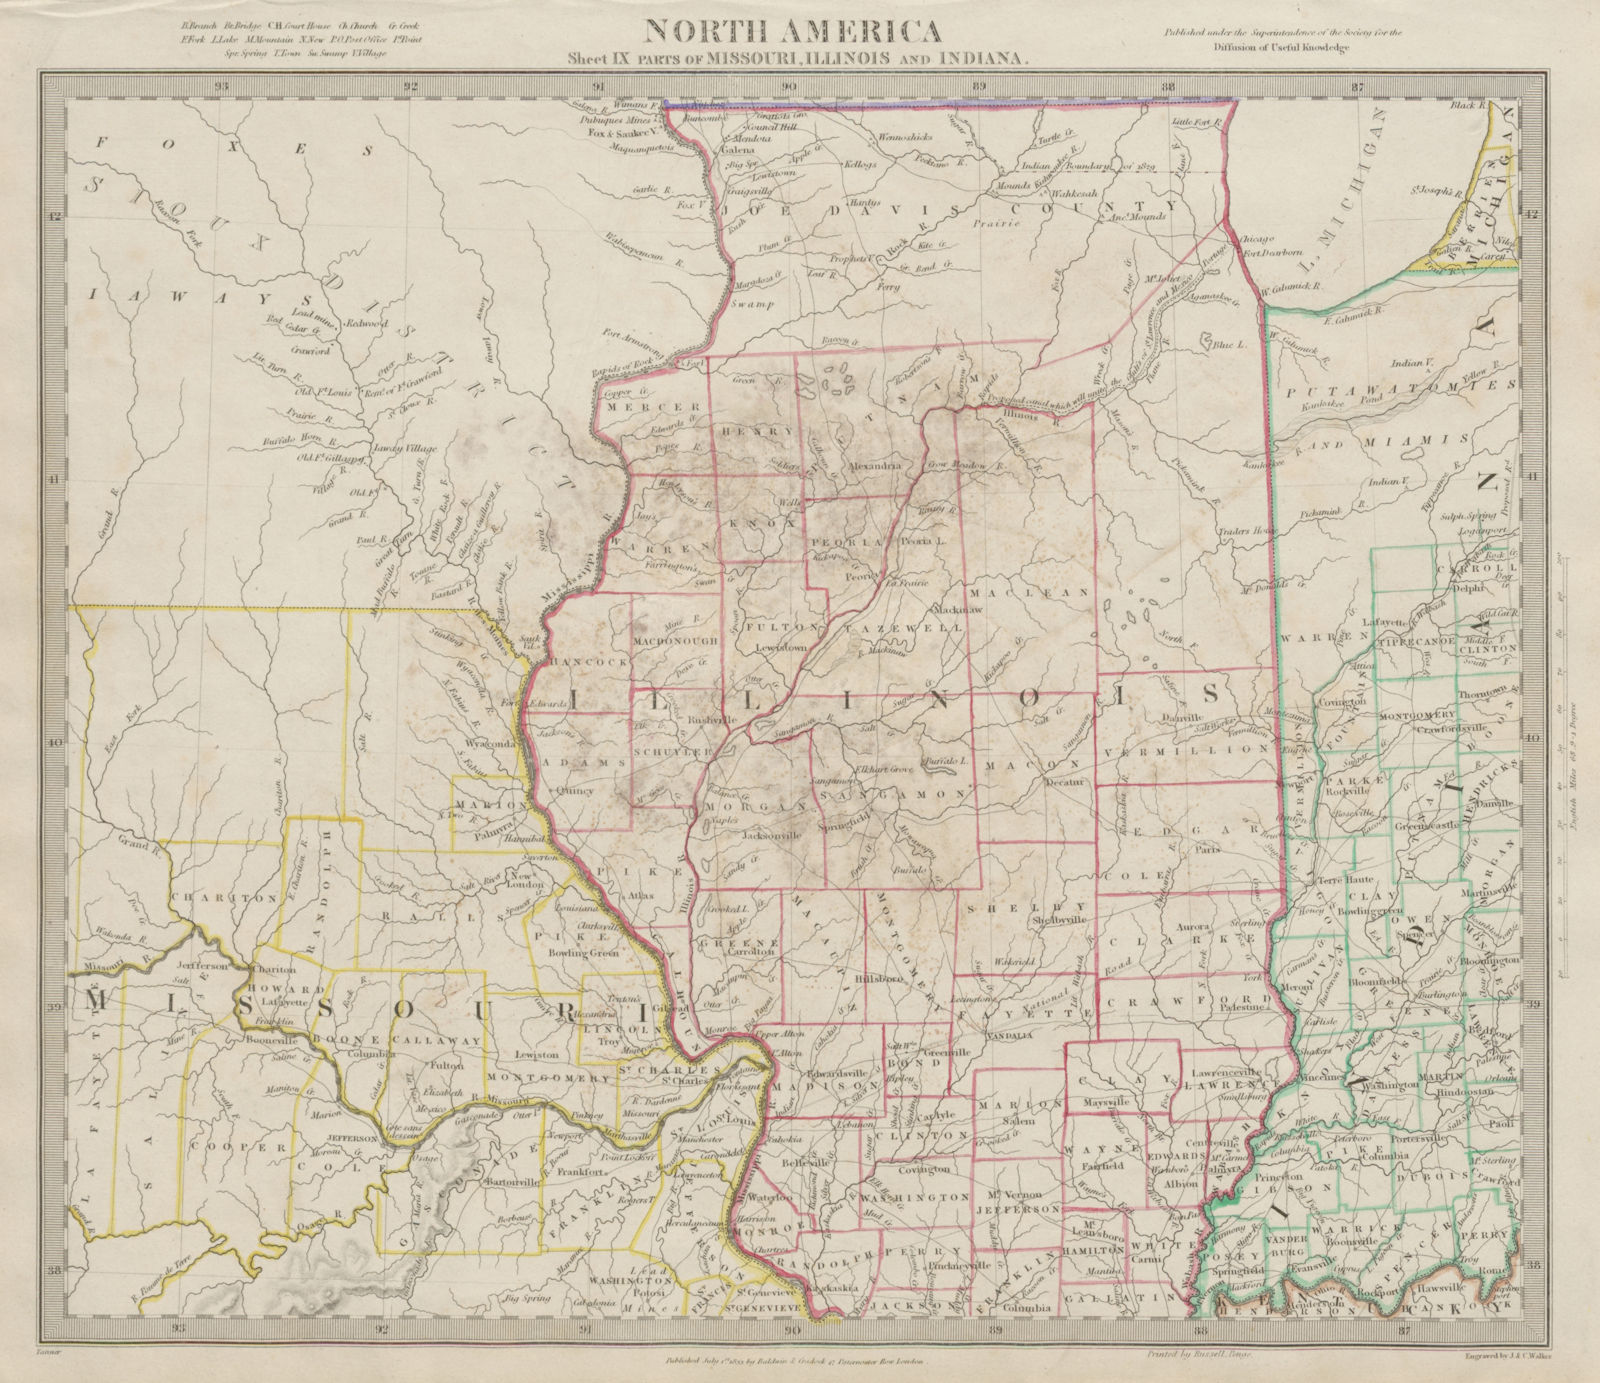 Associate Product USA. Missouri Illinois Indiana. Indian tribes, villages & borders. SDUK 1844 map